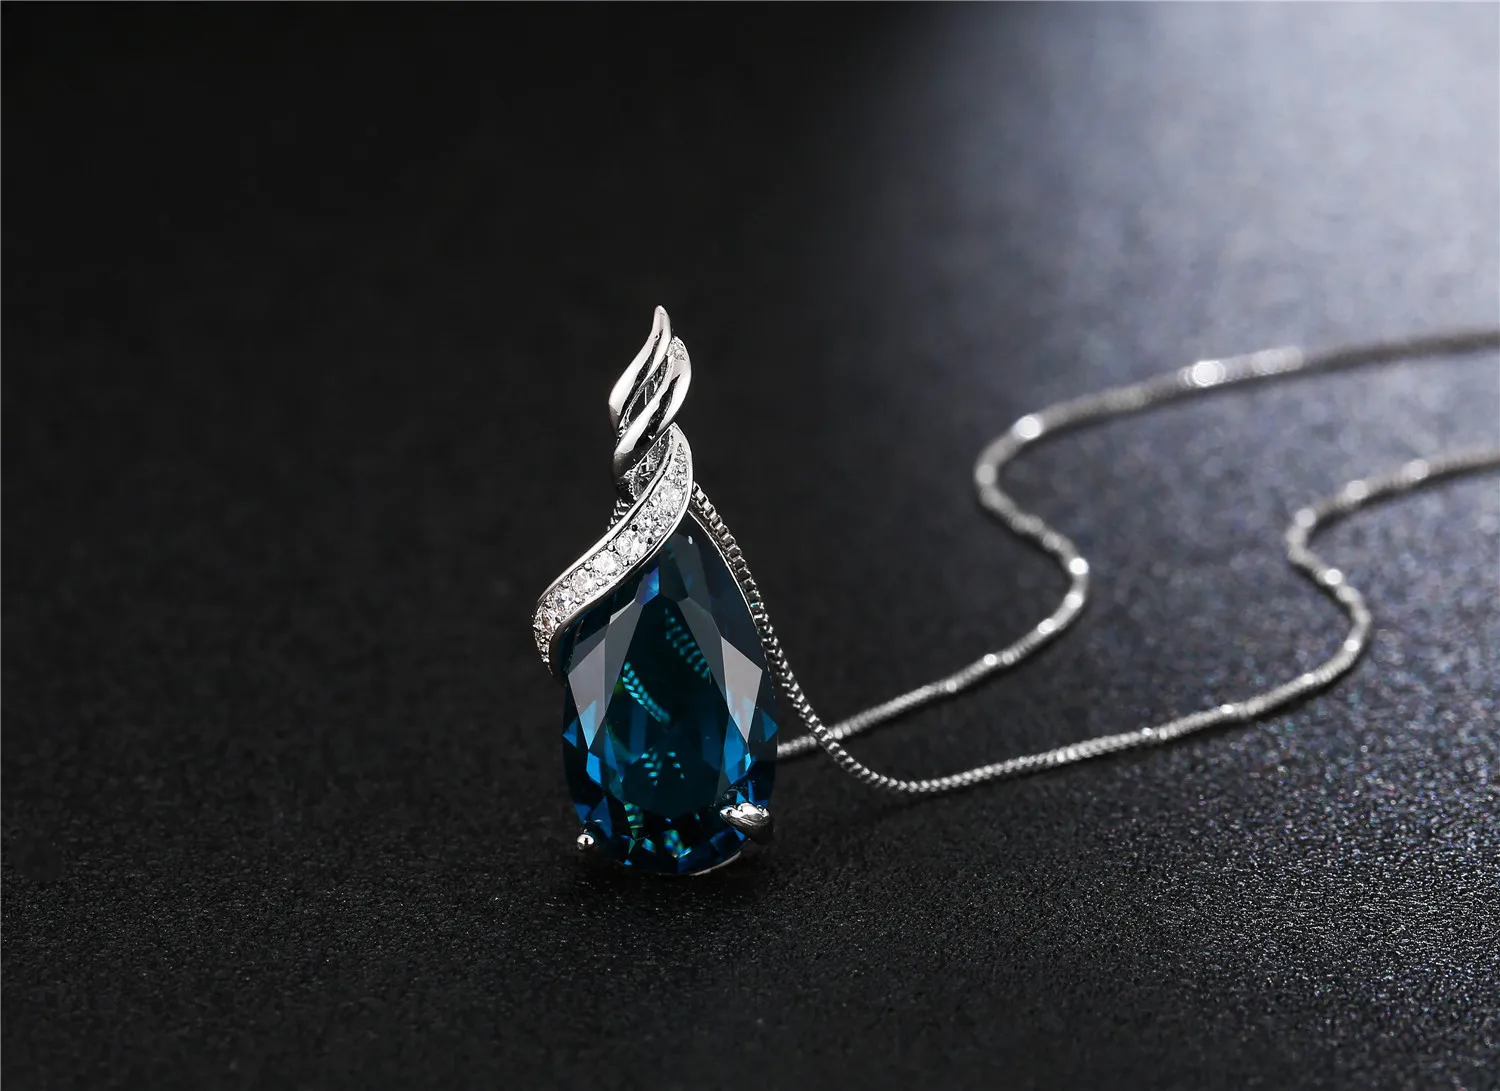 Most Sale Pendants Chakra Design Pendant Gemstone Pendant For Women Trending Blue Sapphire Gemstone 925 Silver Plated Pendant Jewelry